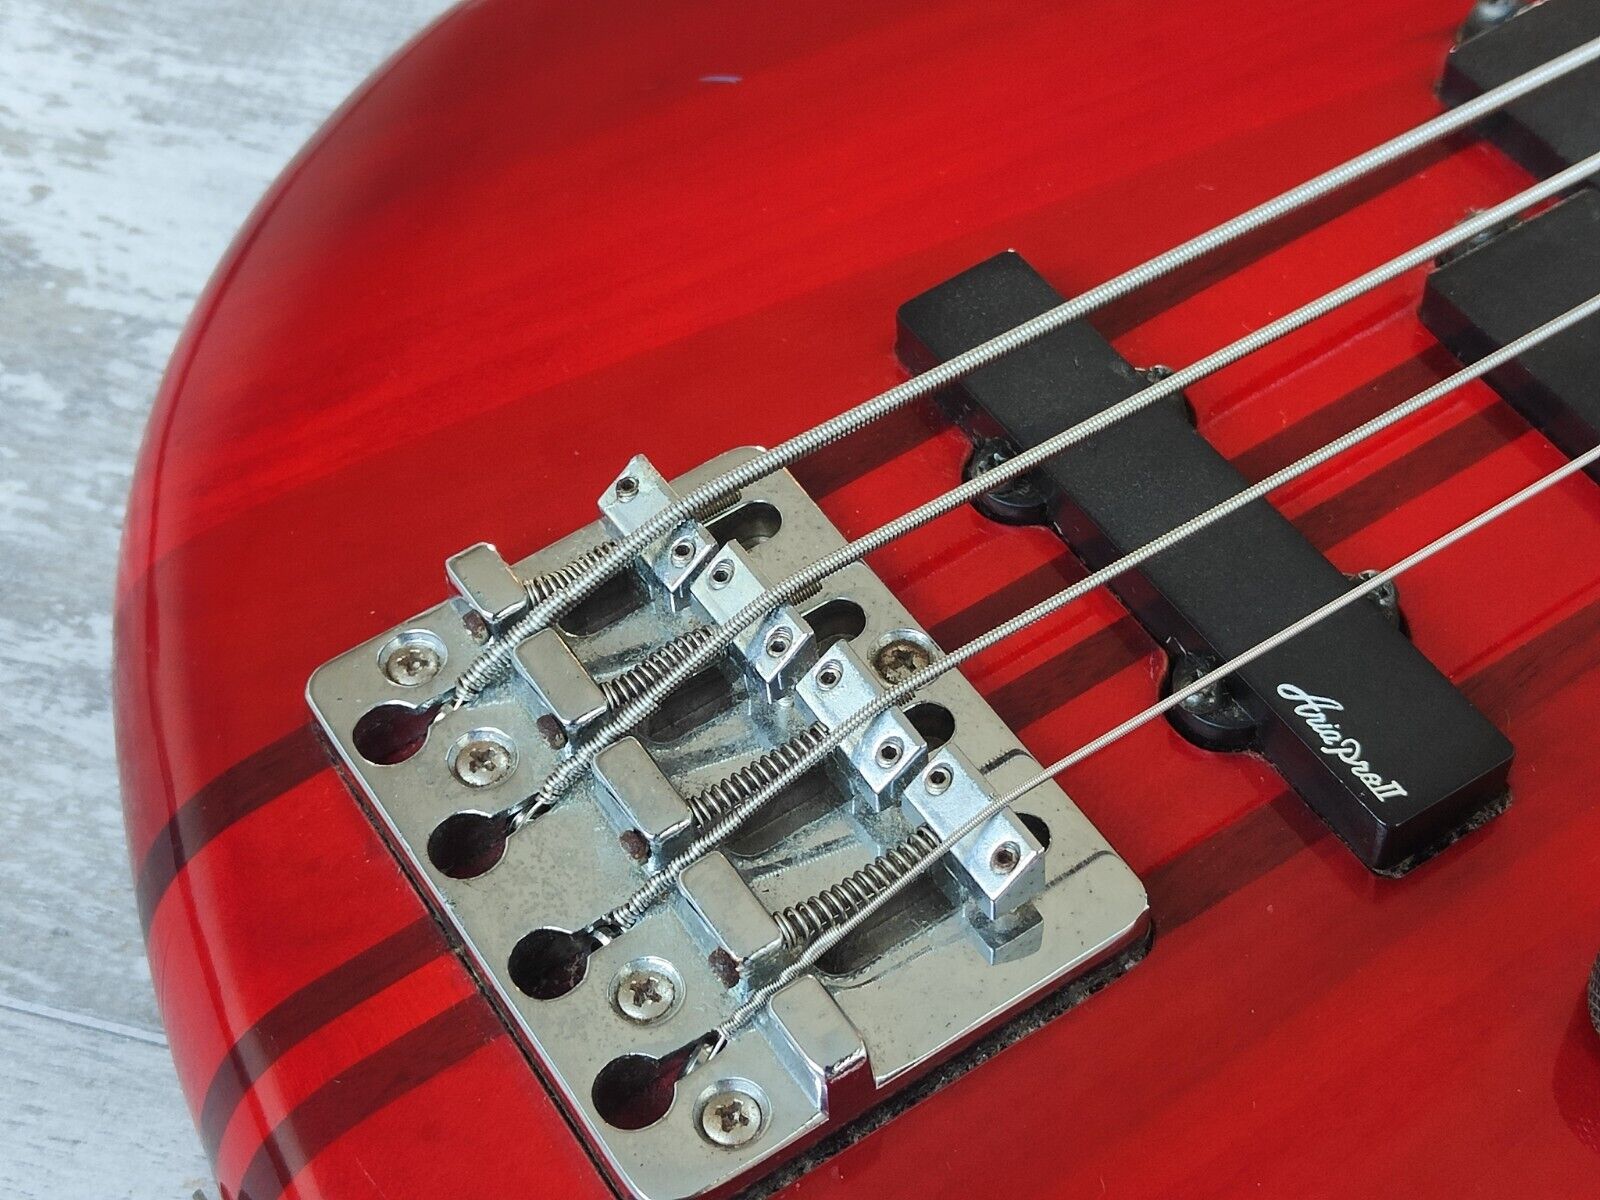 1989 Aria Pro II ASB-60 Integra Series Neckthrough Bass (Transparent Red)